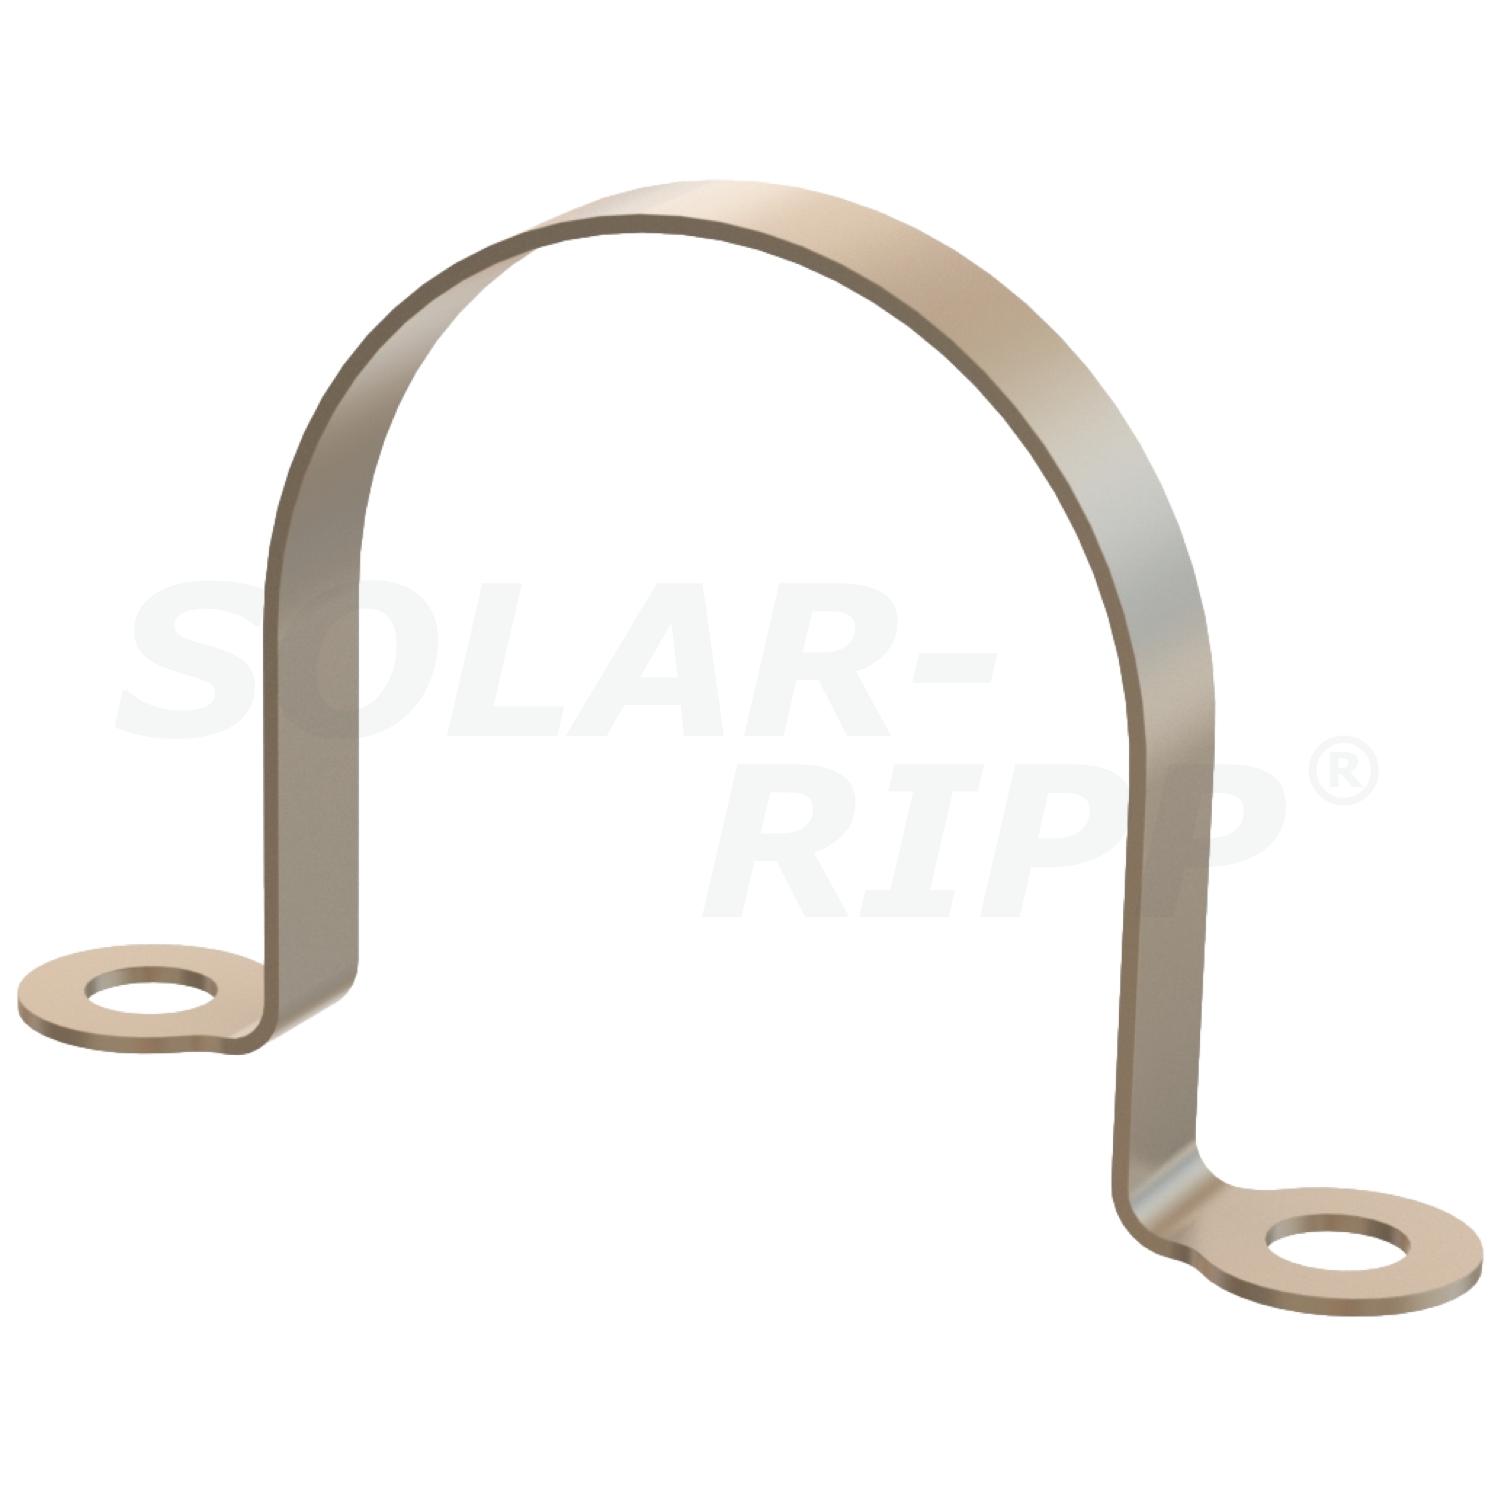 Abrazadera para distribuidor/colector SOLAR-RIPP ® de 50 mm de diámetro